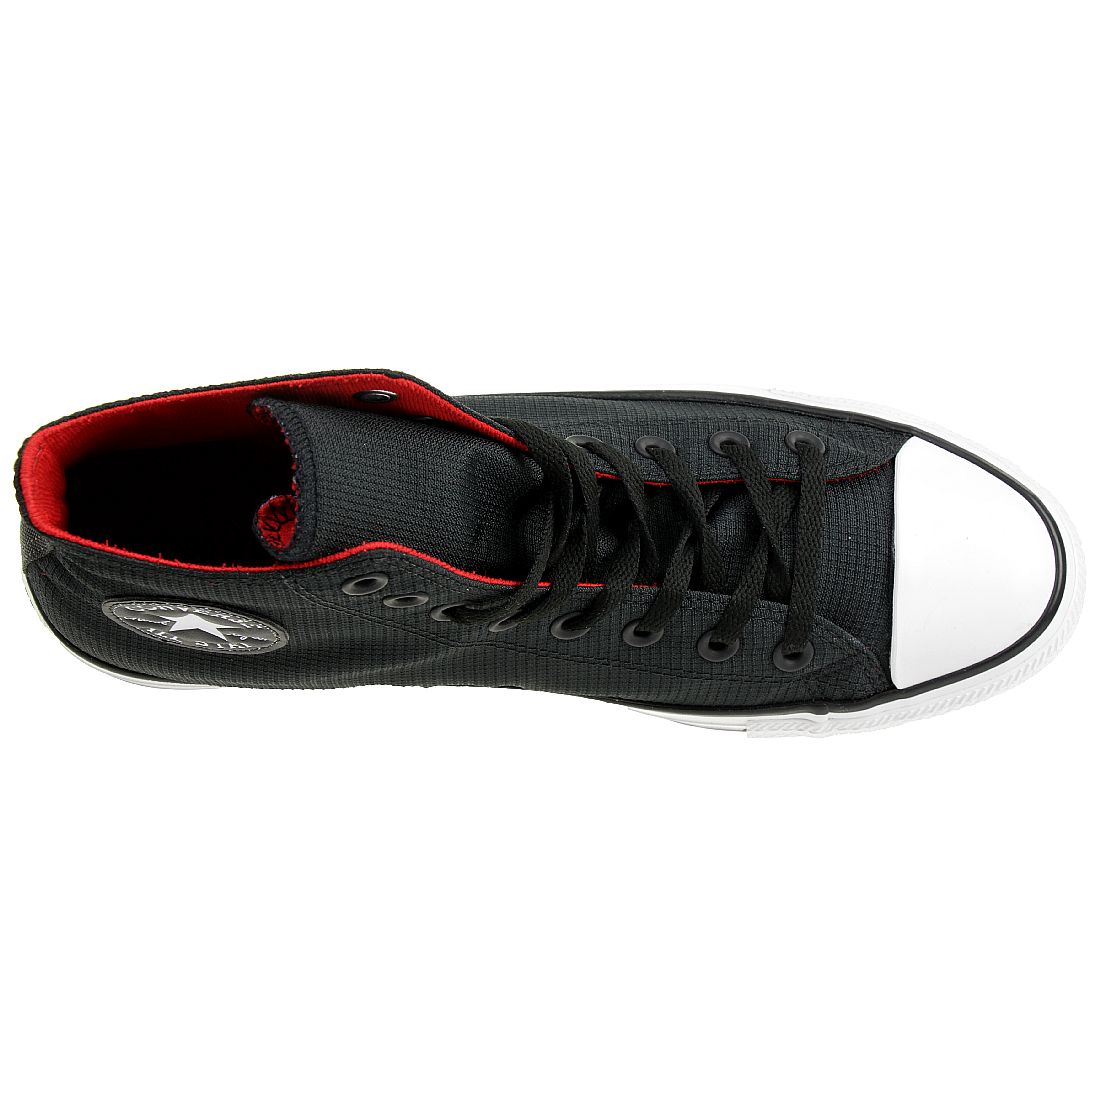 Converse C Taylor All Star HI Chuck Schuhe Sneaker Lightweight Nylon schwarz 162390C 